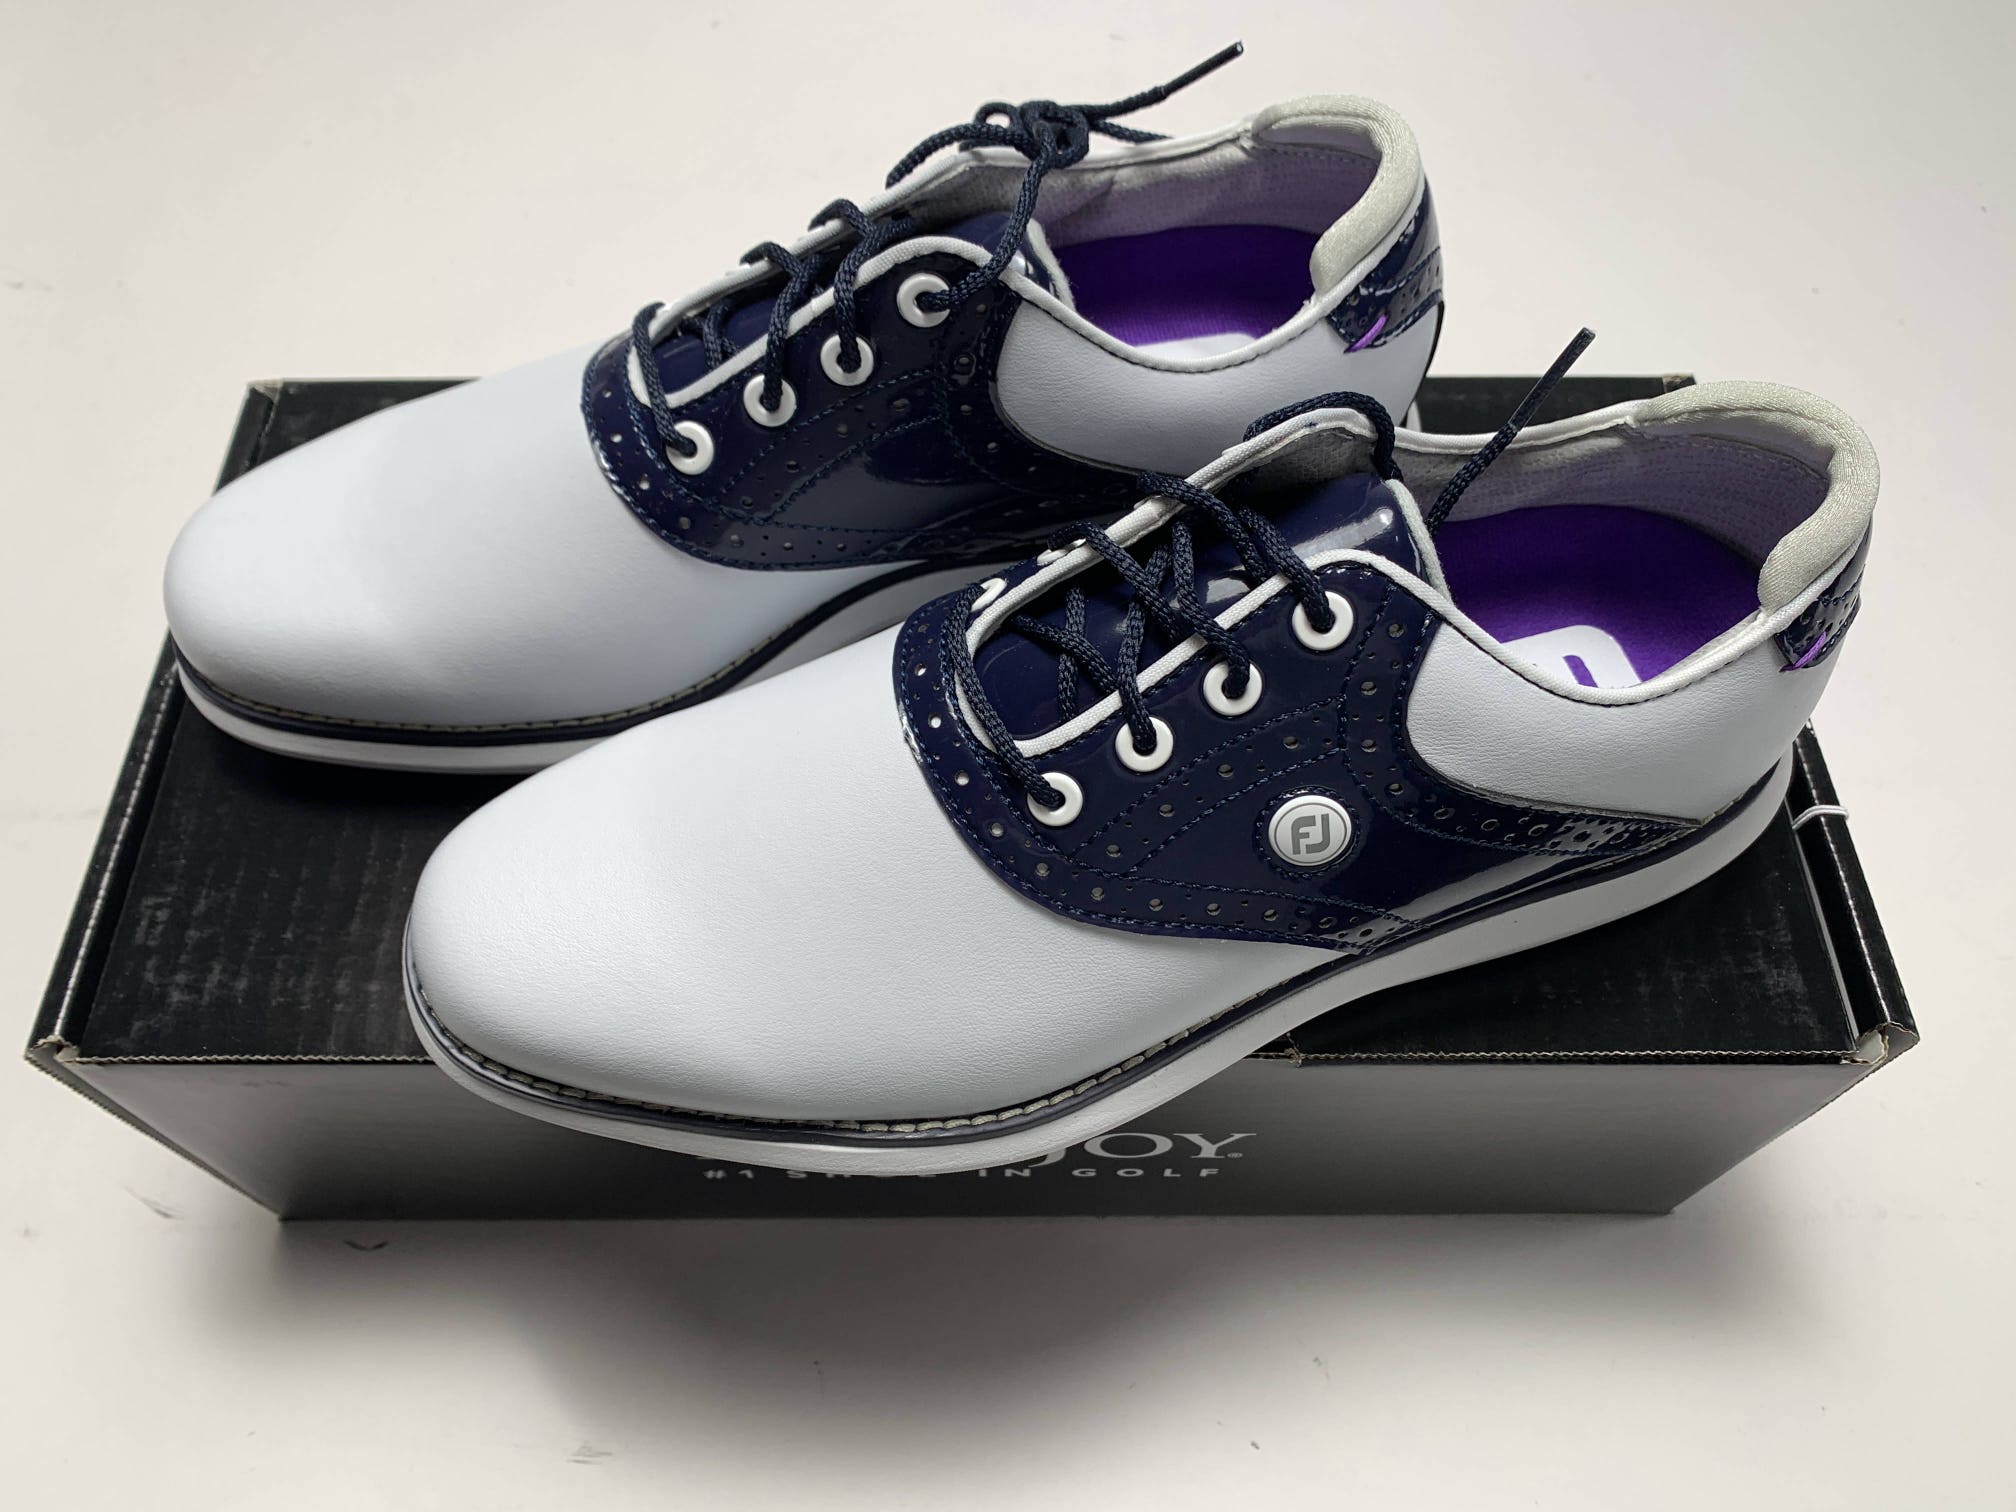 FootJoy FJ Traditions Golf Shoes White Navy / Patent Women's SZ 7 (97899)